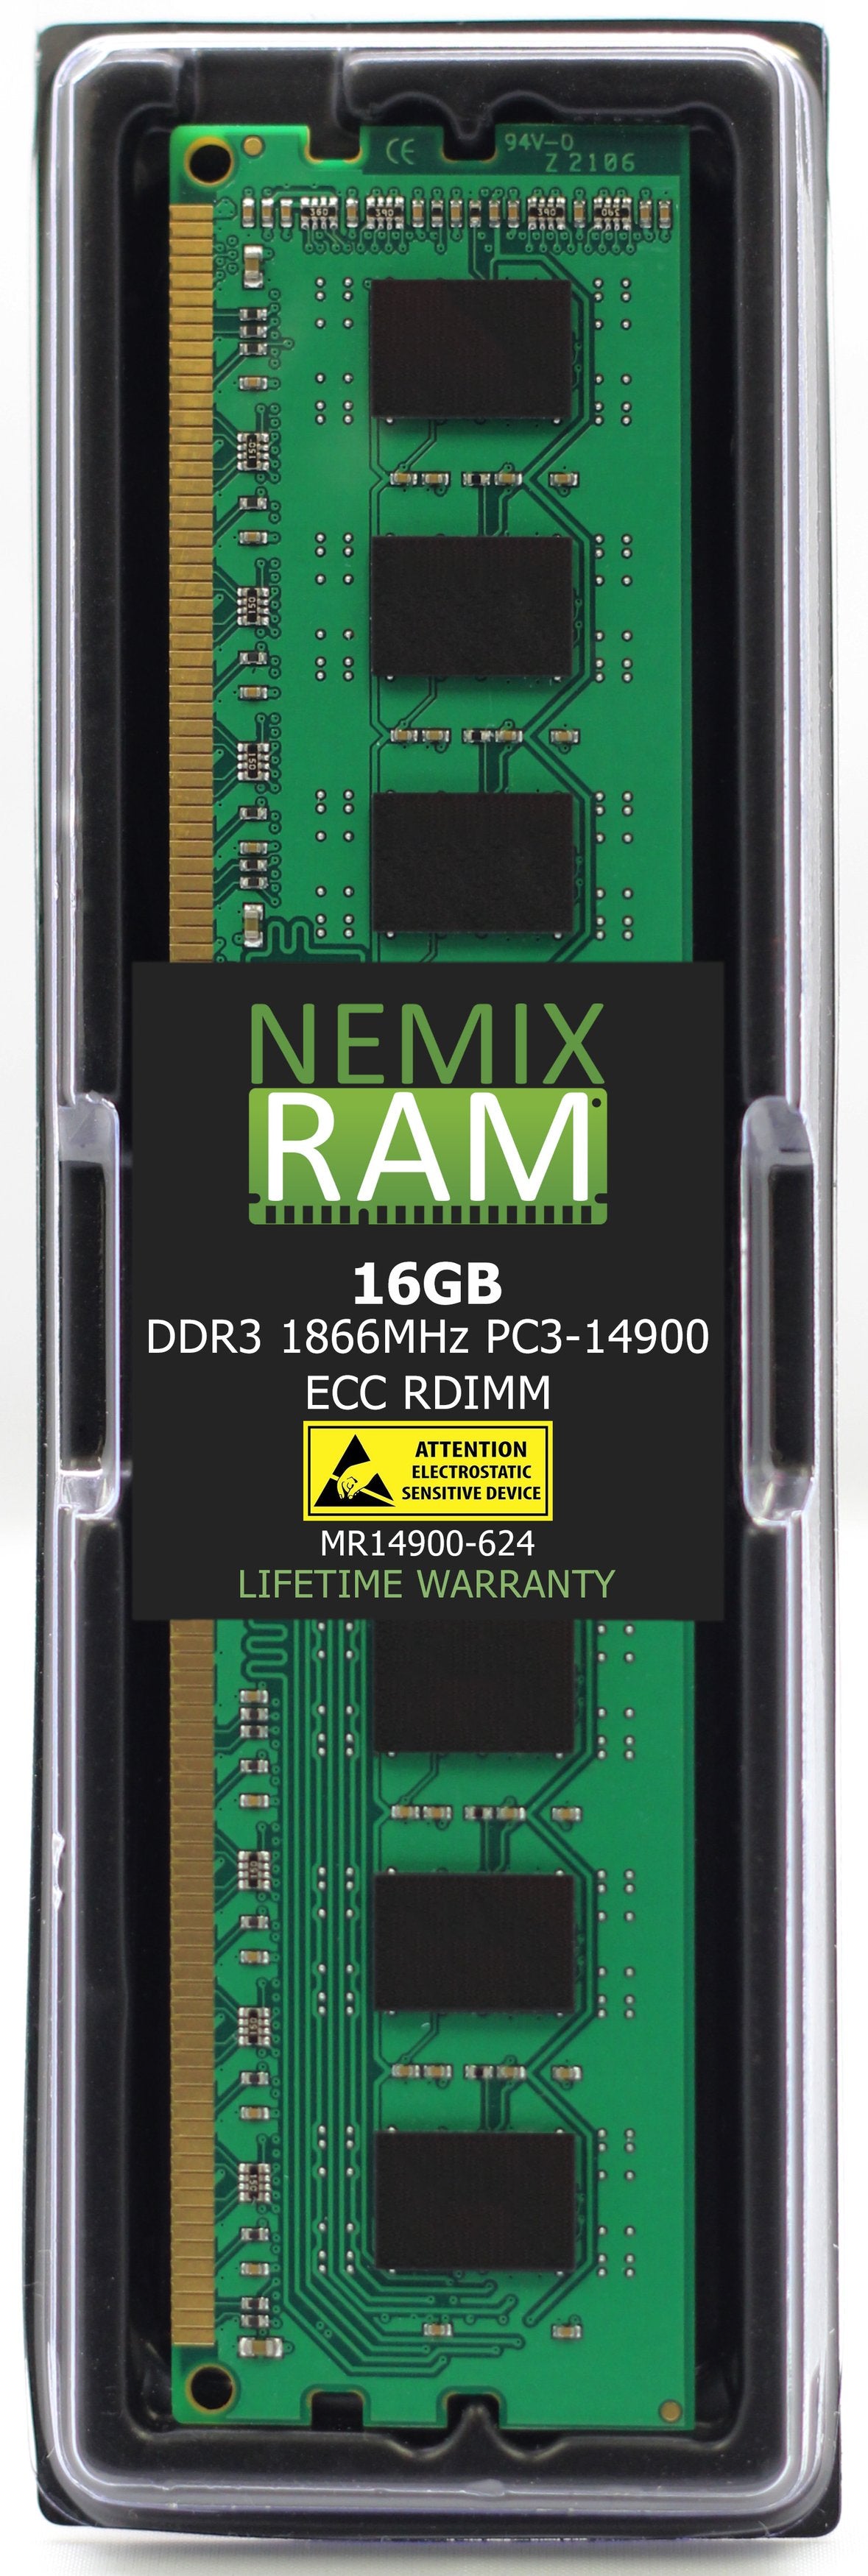 Hynix HMT42GR7BFR4C-RD 16GB DDR3 1866MHZ PC3-14900 RDIMM Compatible Memory Module